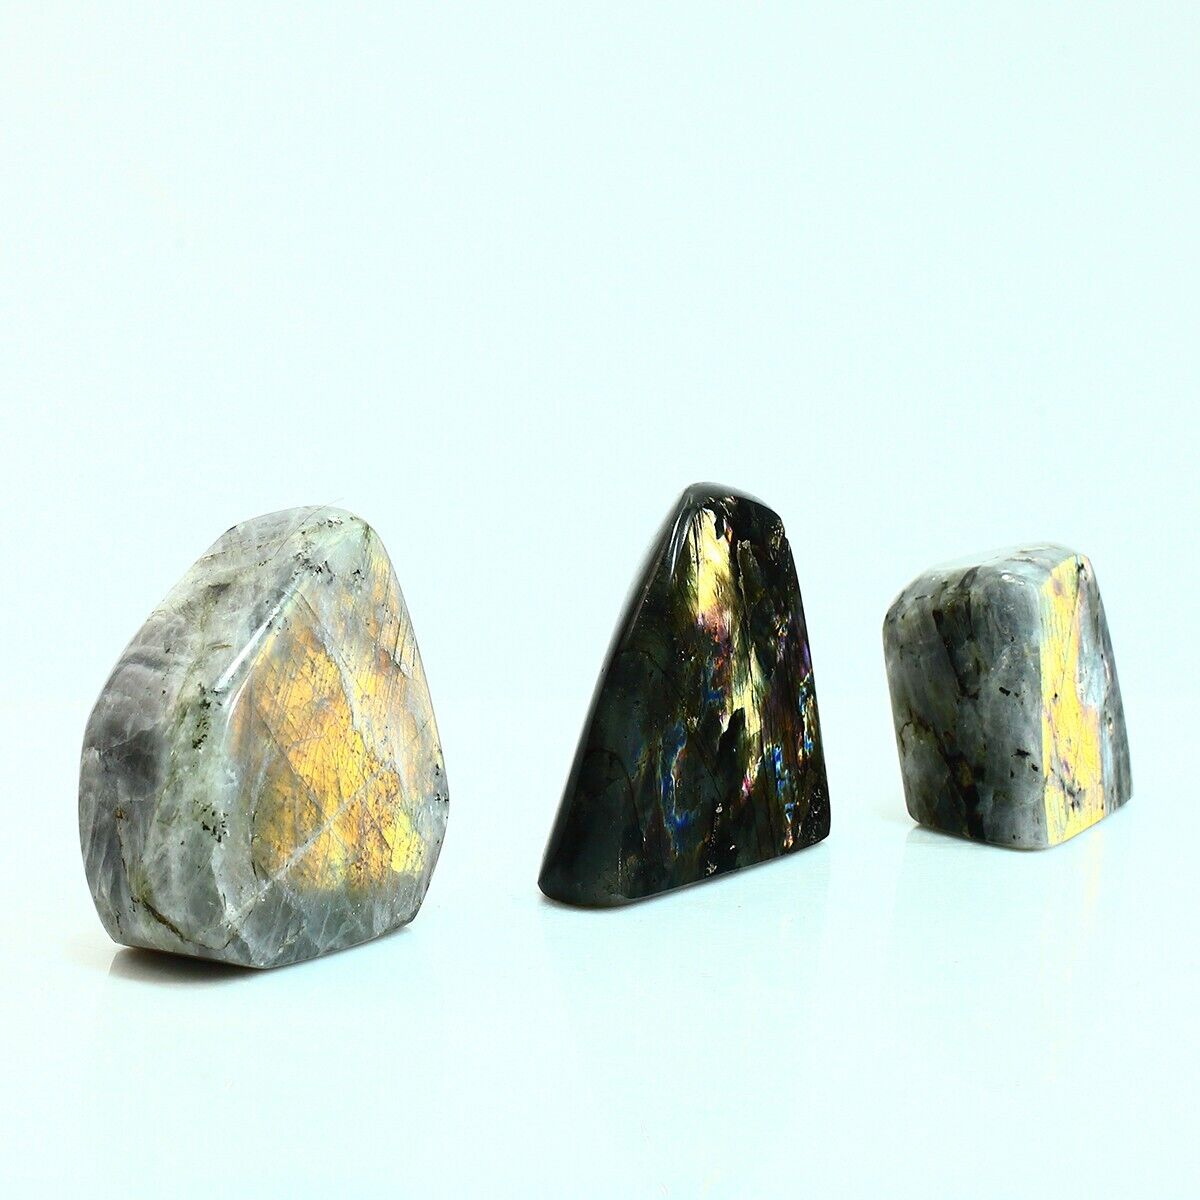 200g+ Natural Blue Light Flash Labradorite Crystal Mineral Specimen Healing Gift